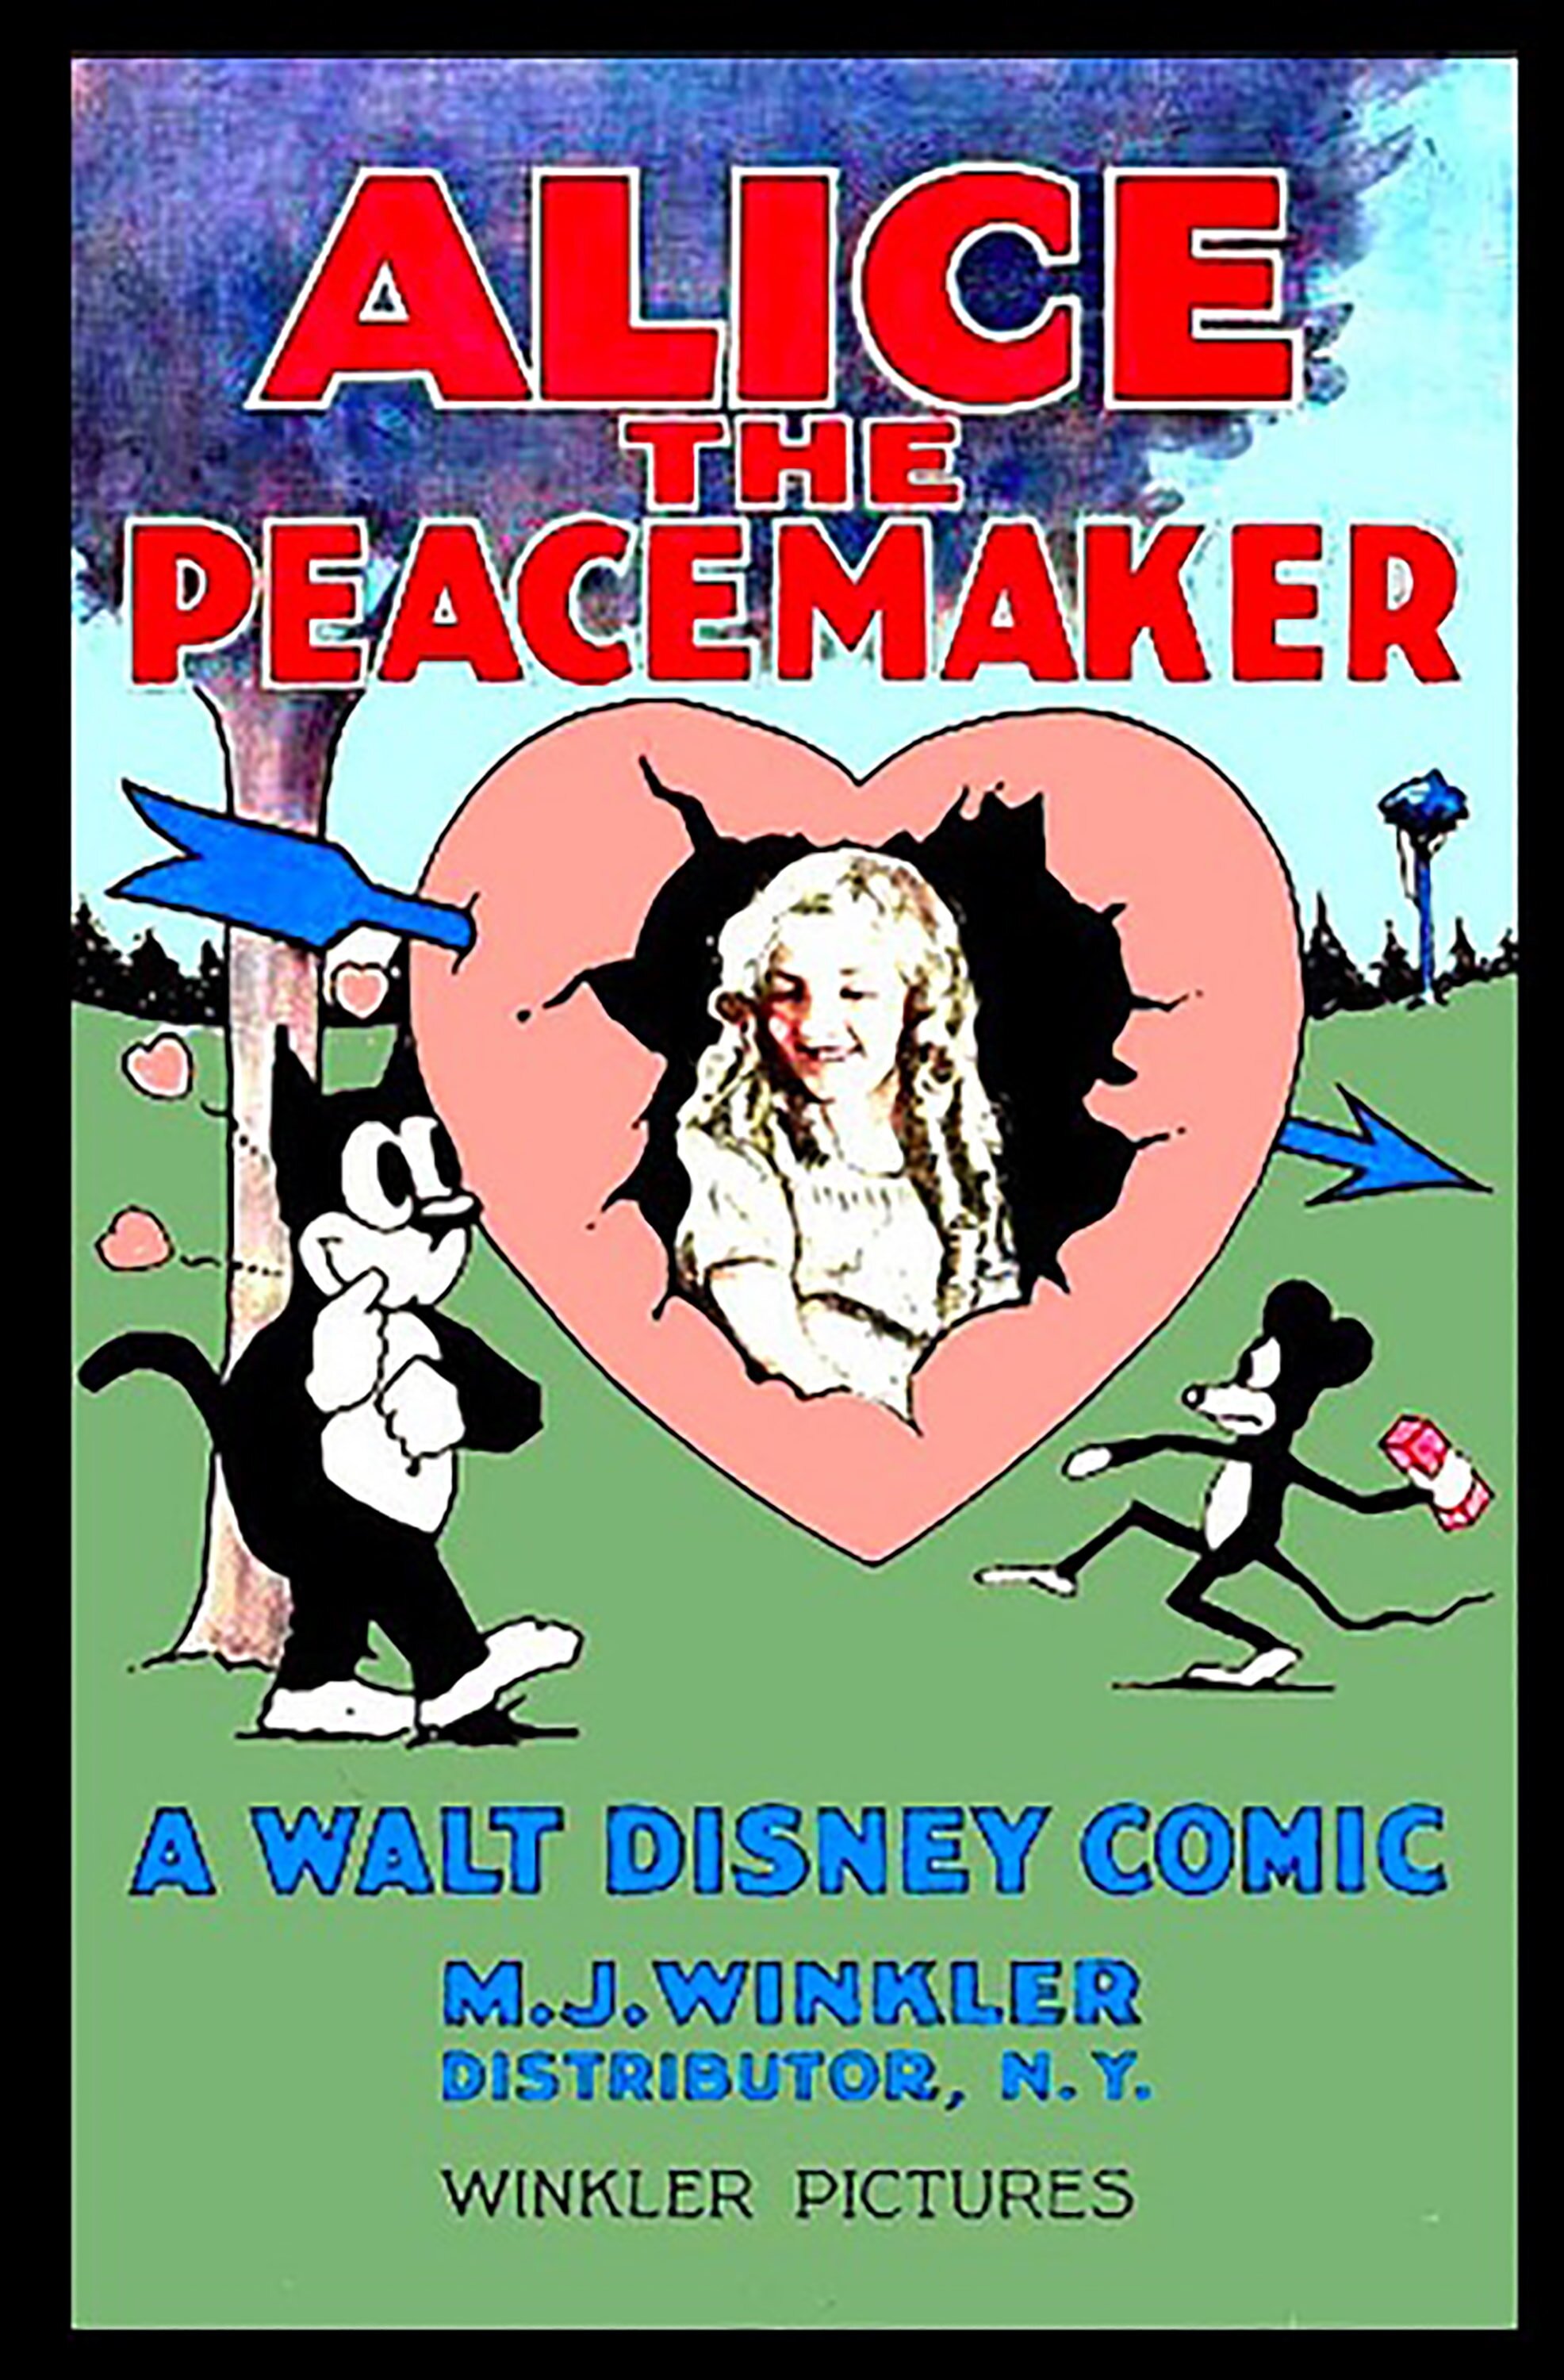 14-poster-for-disneys-alice-the-peacemaker.jpg